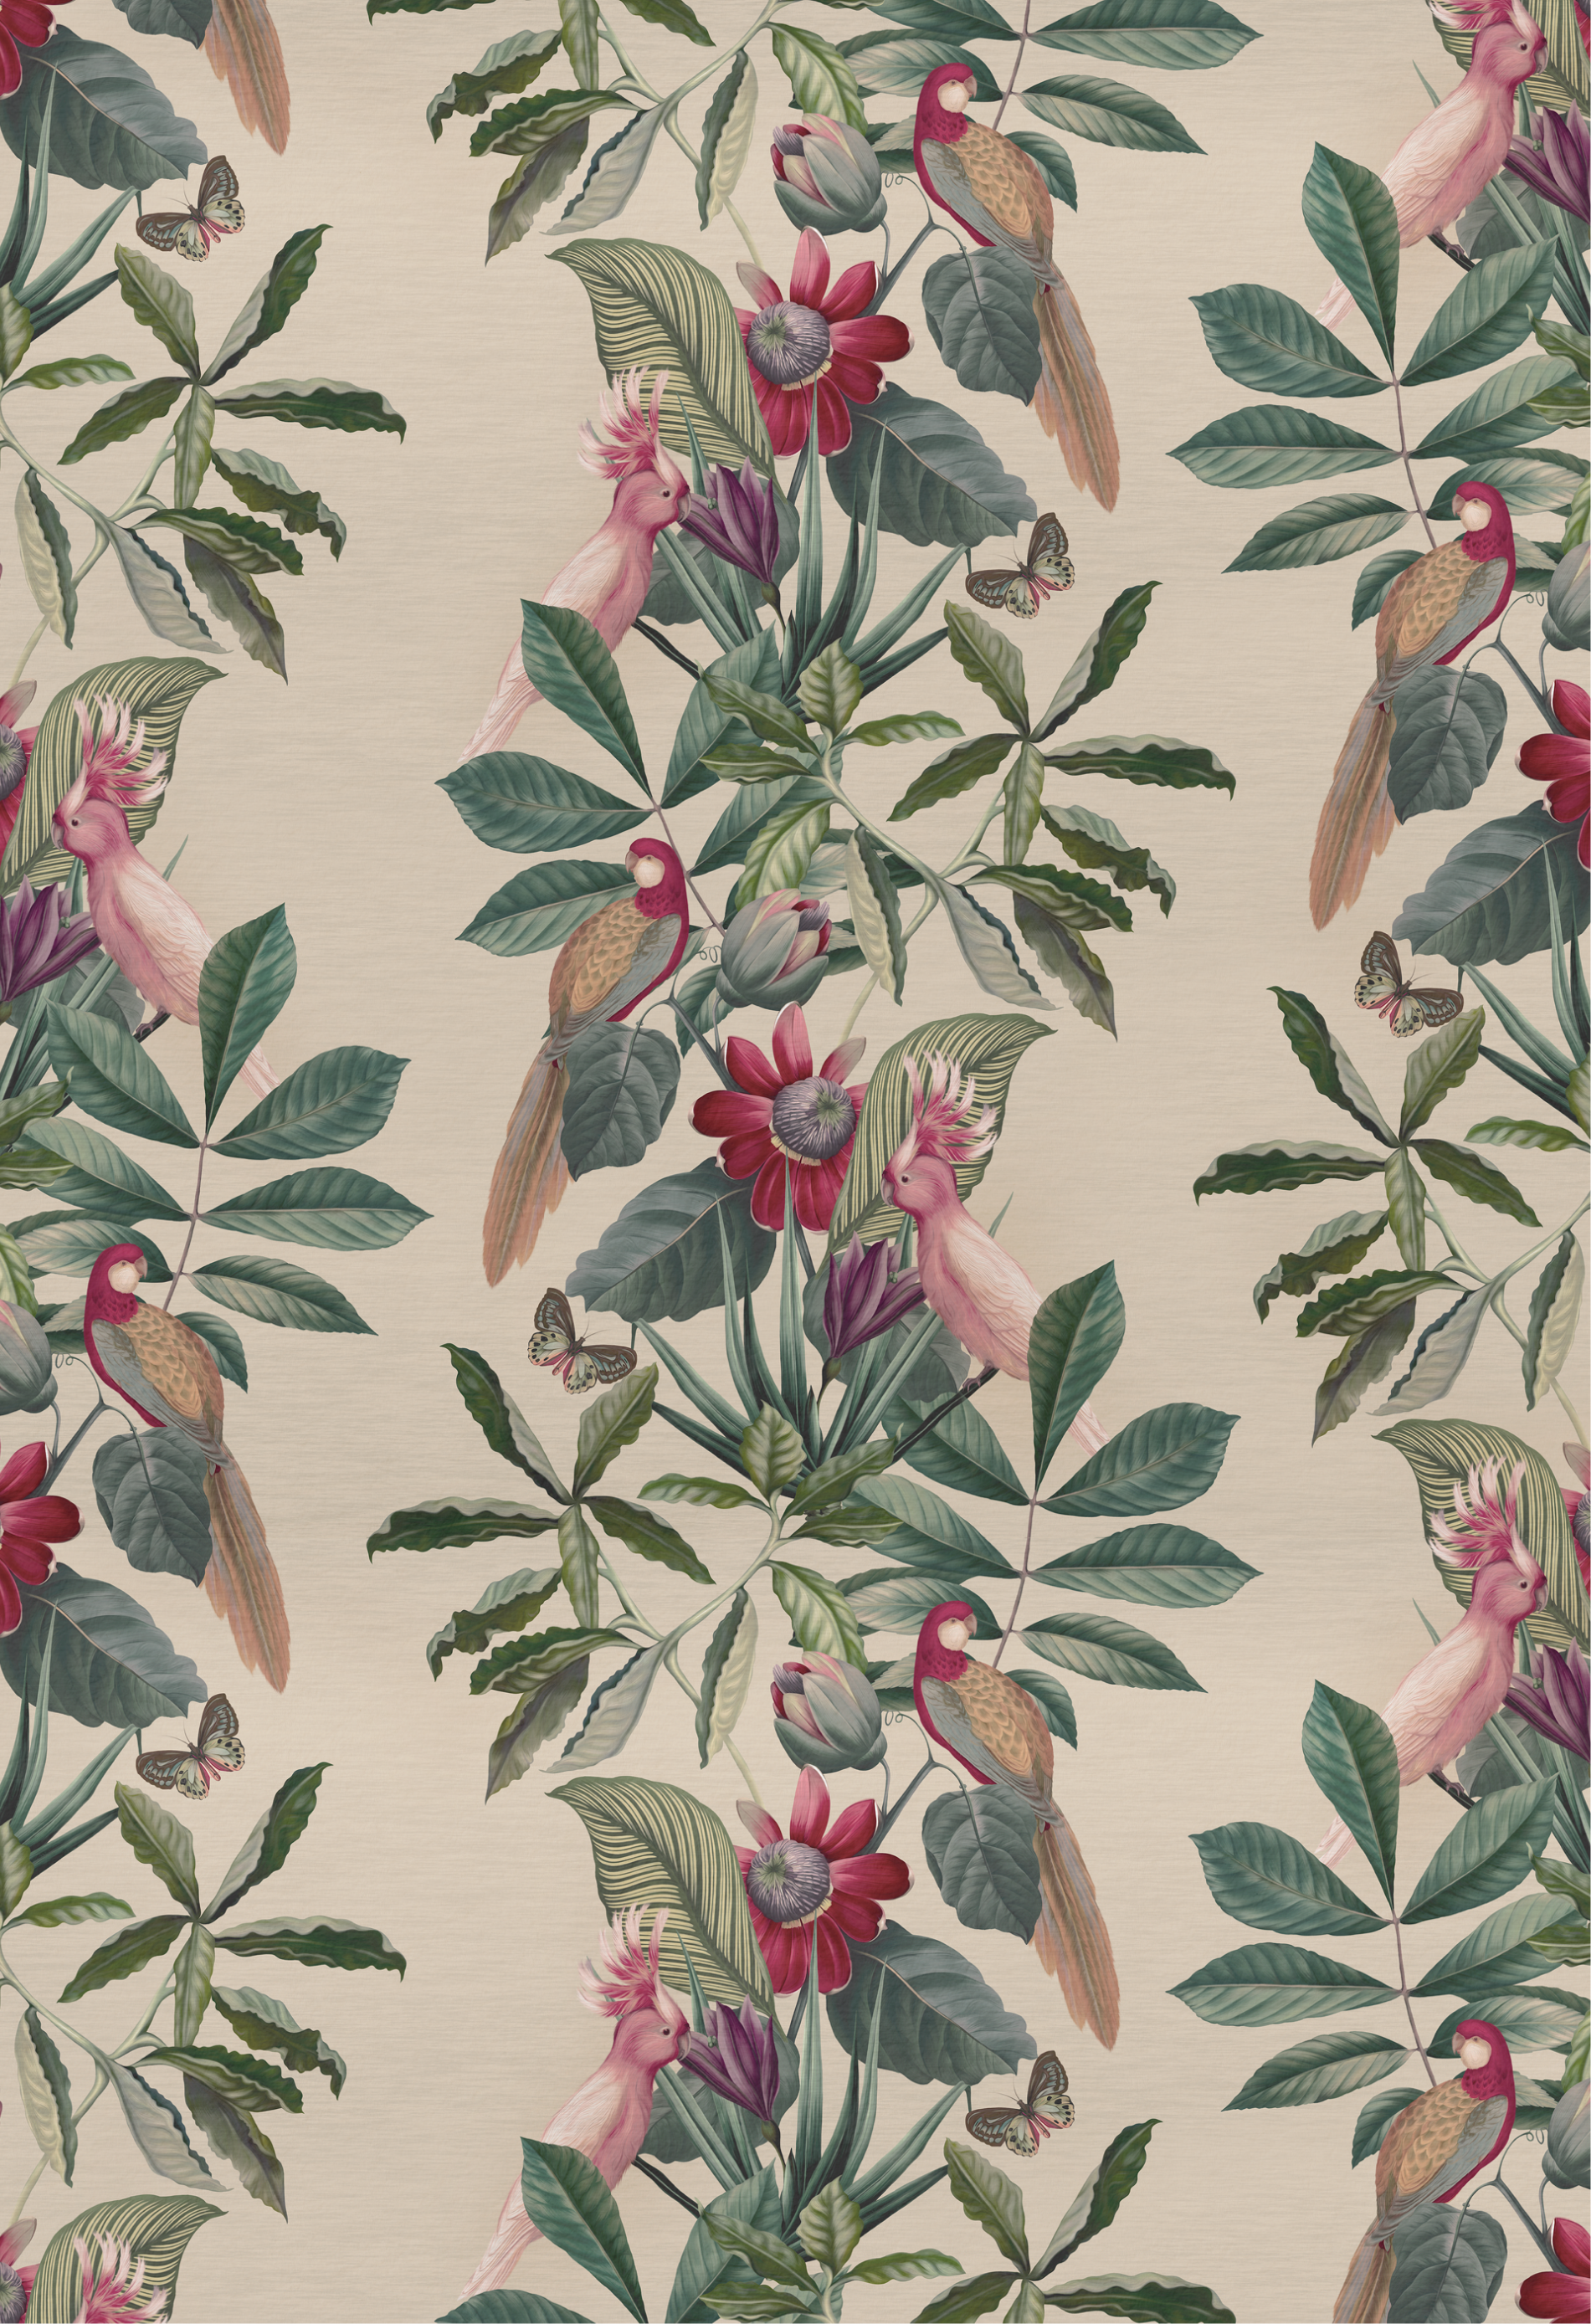 Tropical luxurious pattern of flowers, birds and butterflies from Deus ex Gardenia's Passiflora Wallpaper in Antique. 